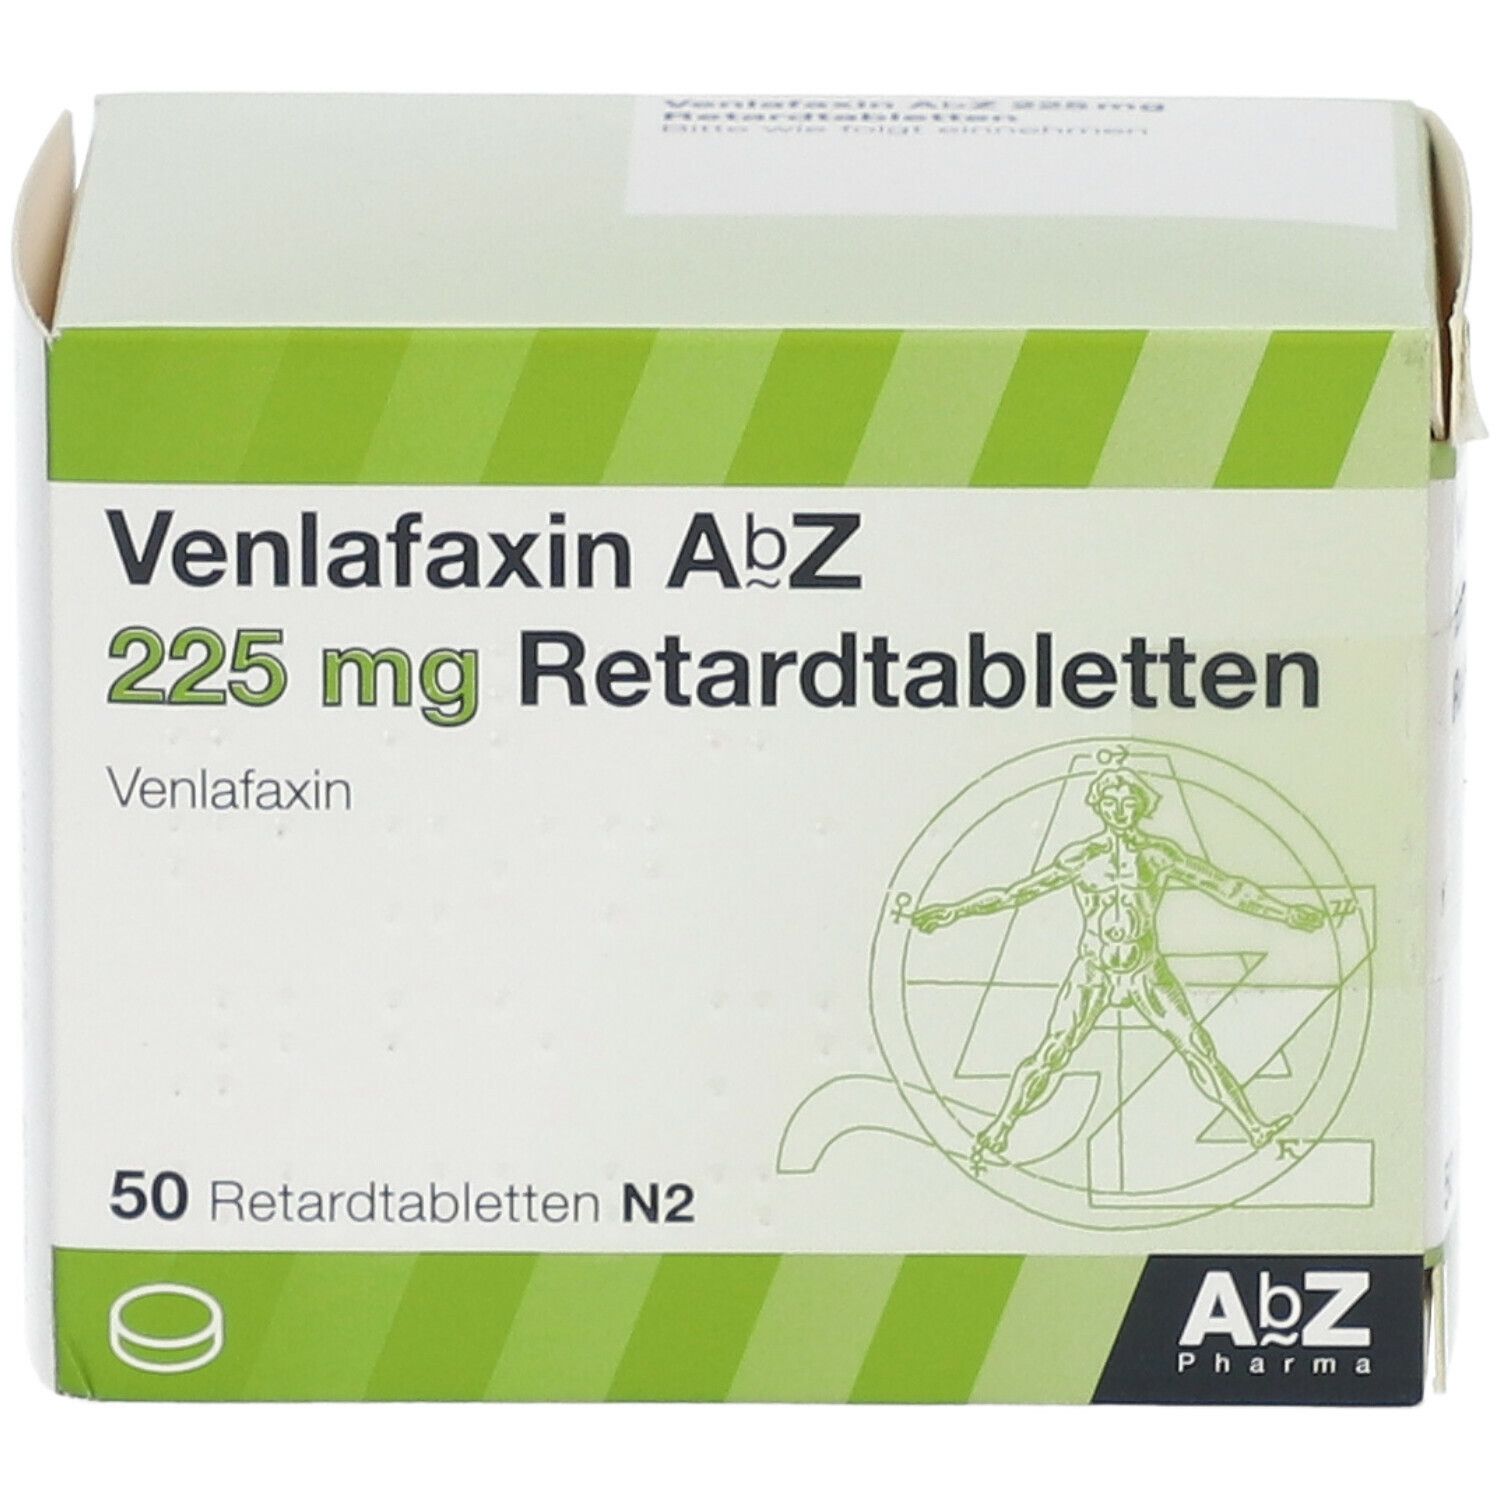 Venlafaxin AbZ 225 mg retard